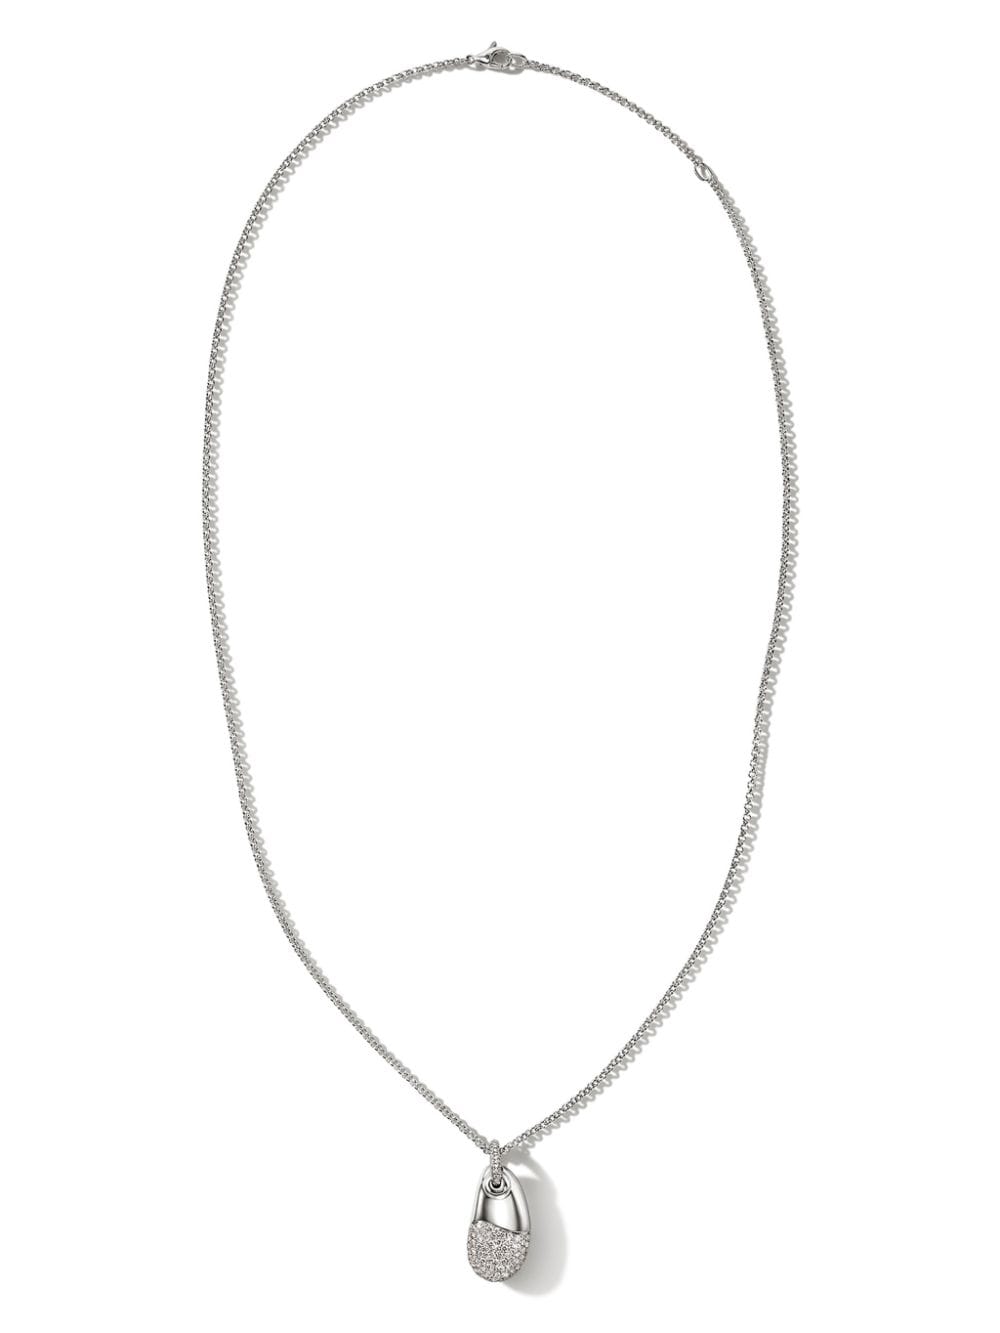 sterling silver Pebble Pendant white diamonds necklace